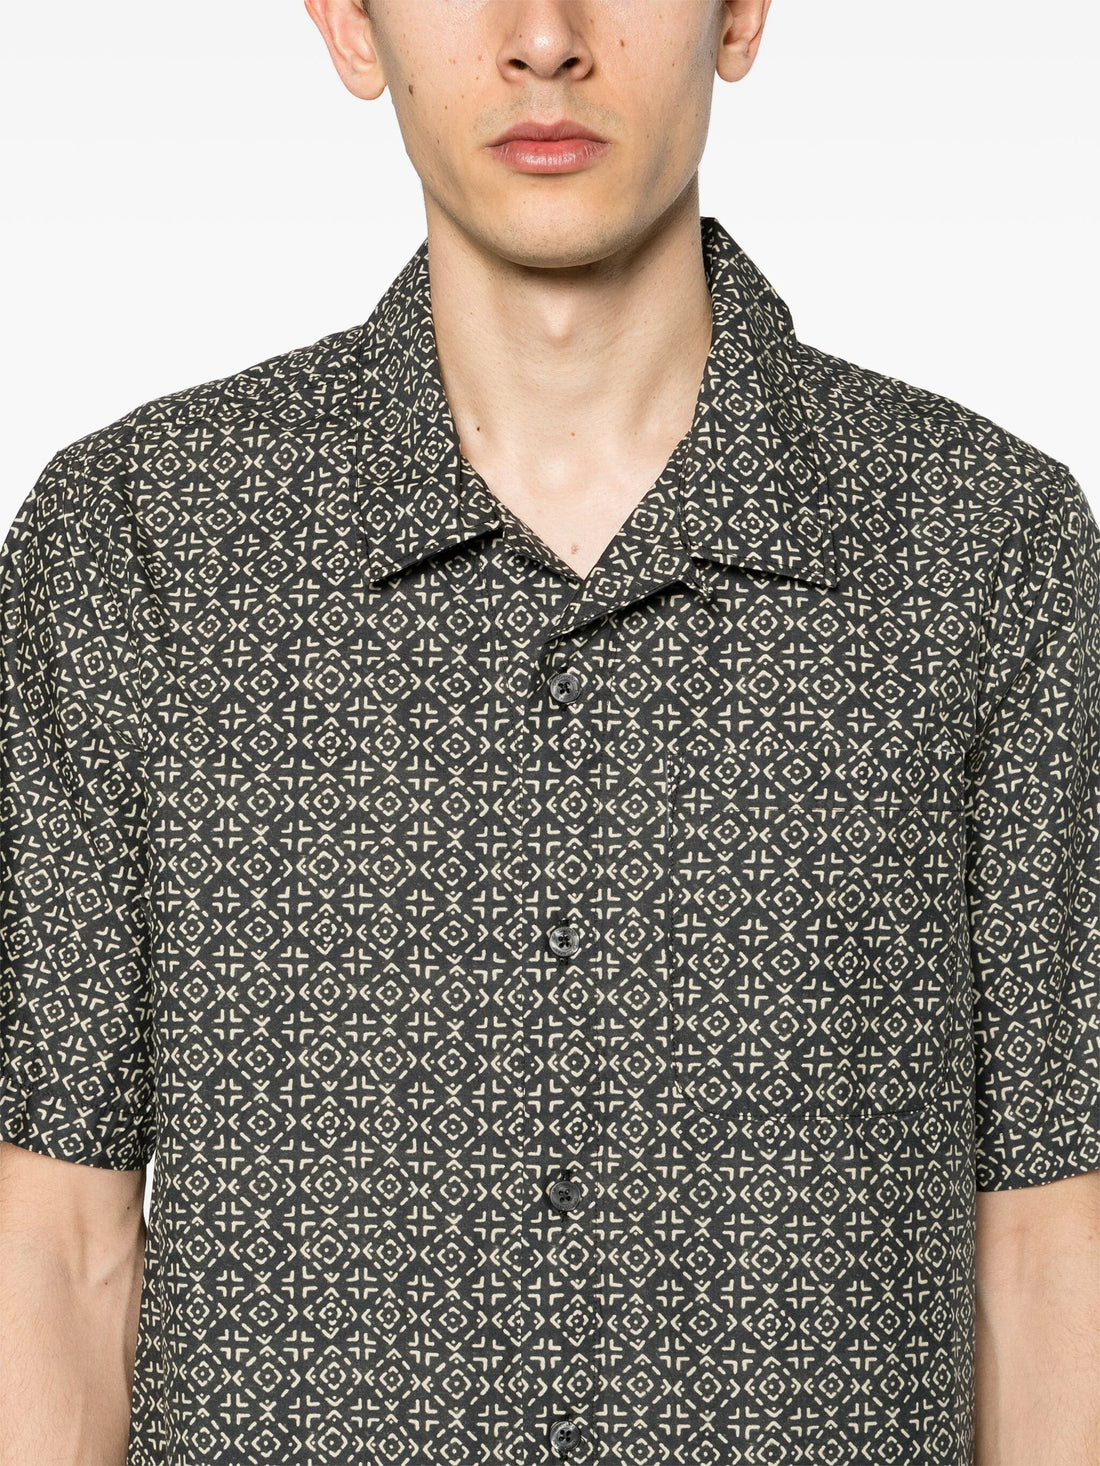 C.P. COMPANY Geometric Print Poplin Short Sleeve Shirt Black/Milk White - MAISONDEFASHION.COM